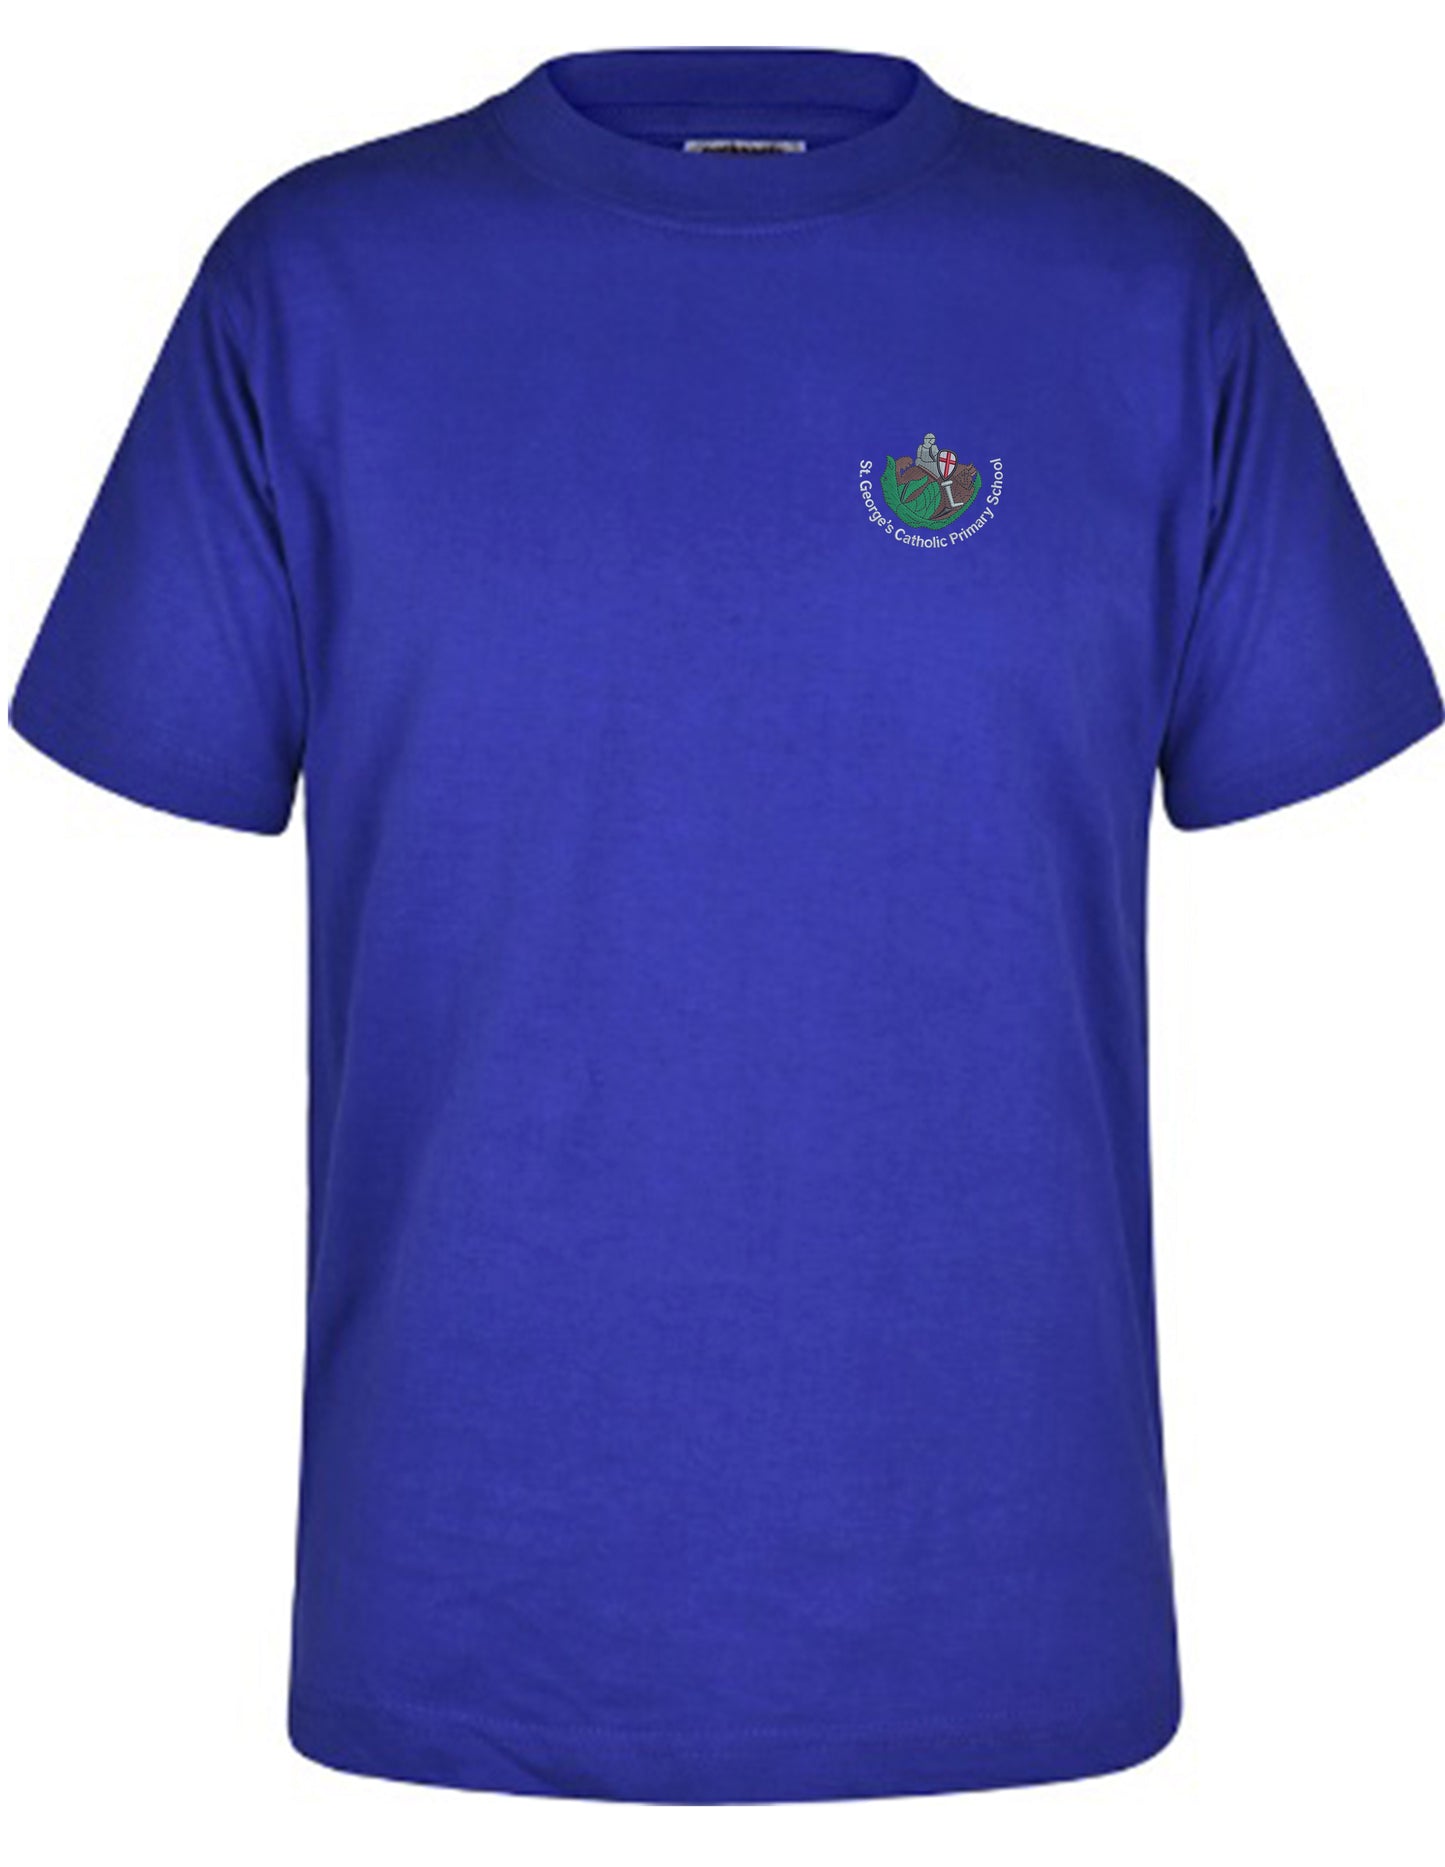 St George's Catholic Primary Voluntary Academy - Unisex Cotton T-shirt - Royal Blue